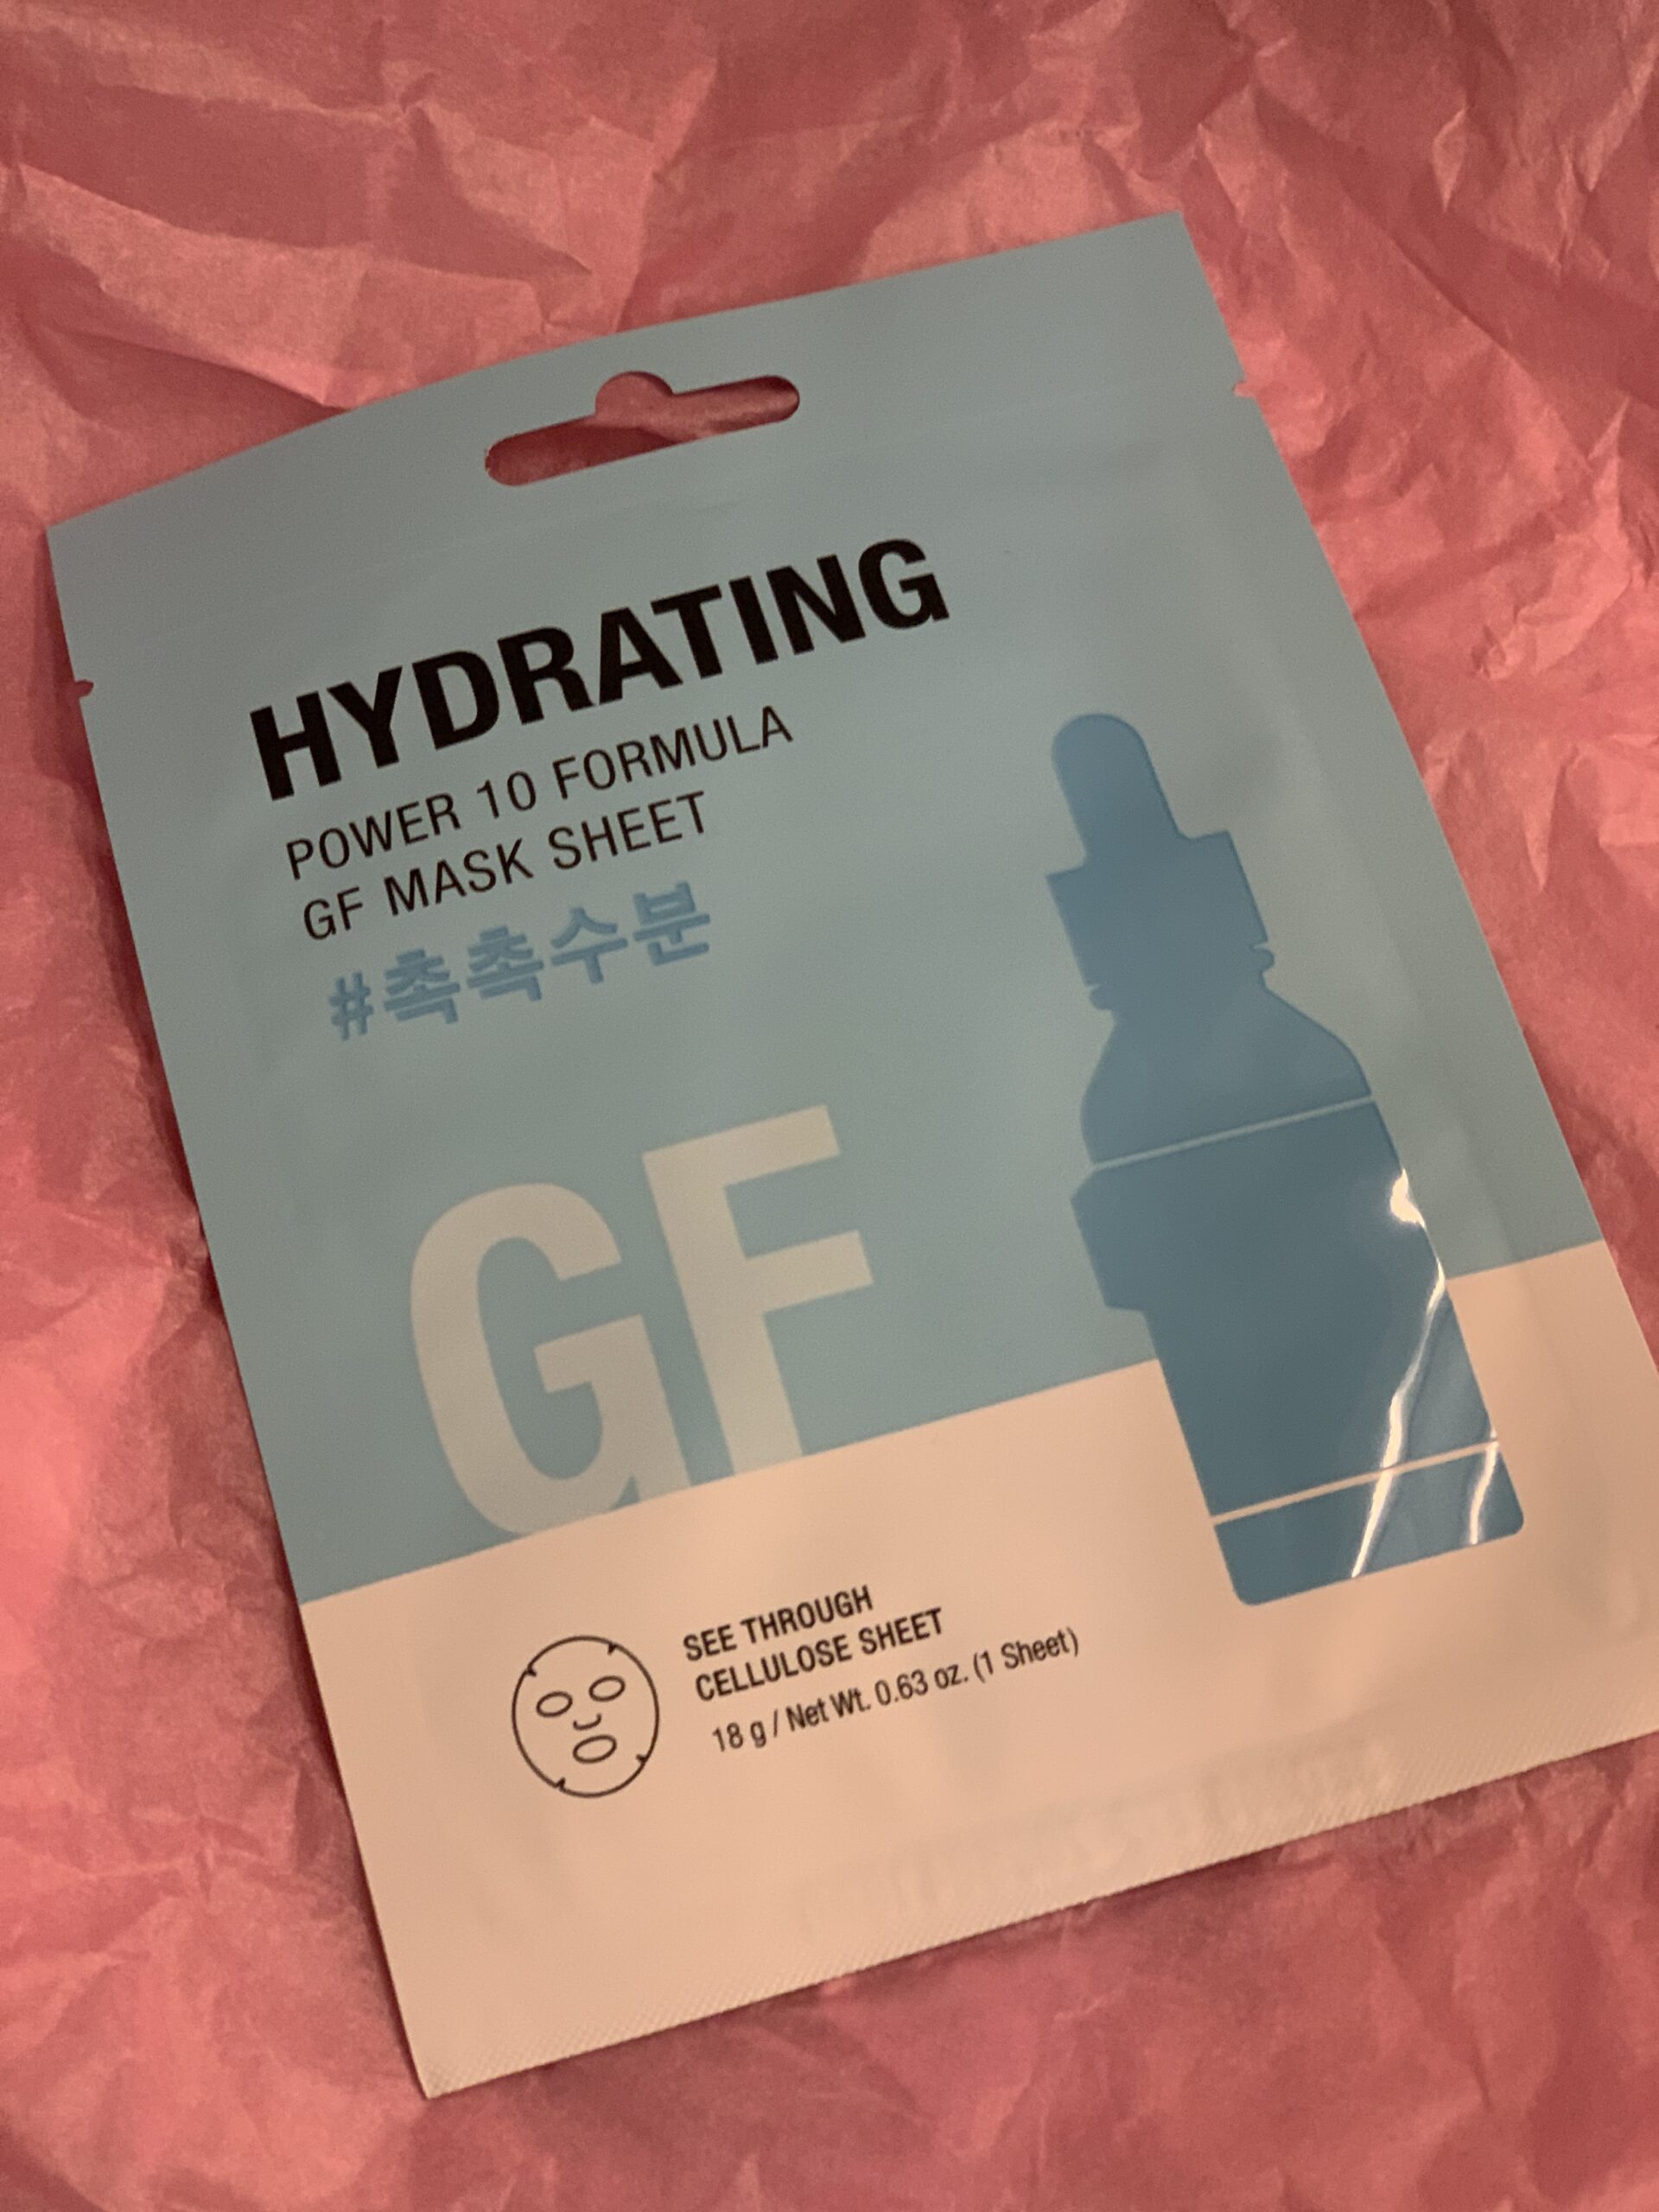 It’s Skin hydrating power 10 formula